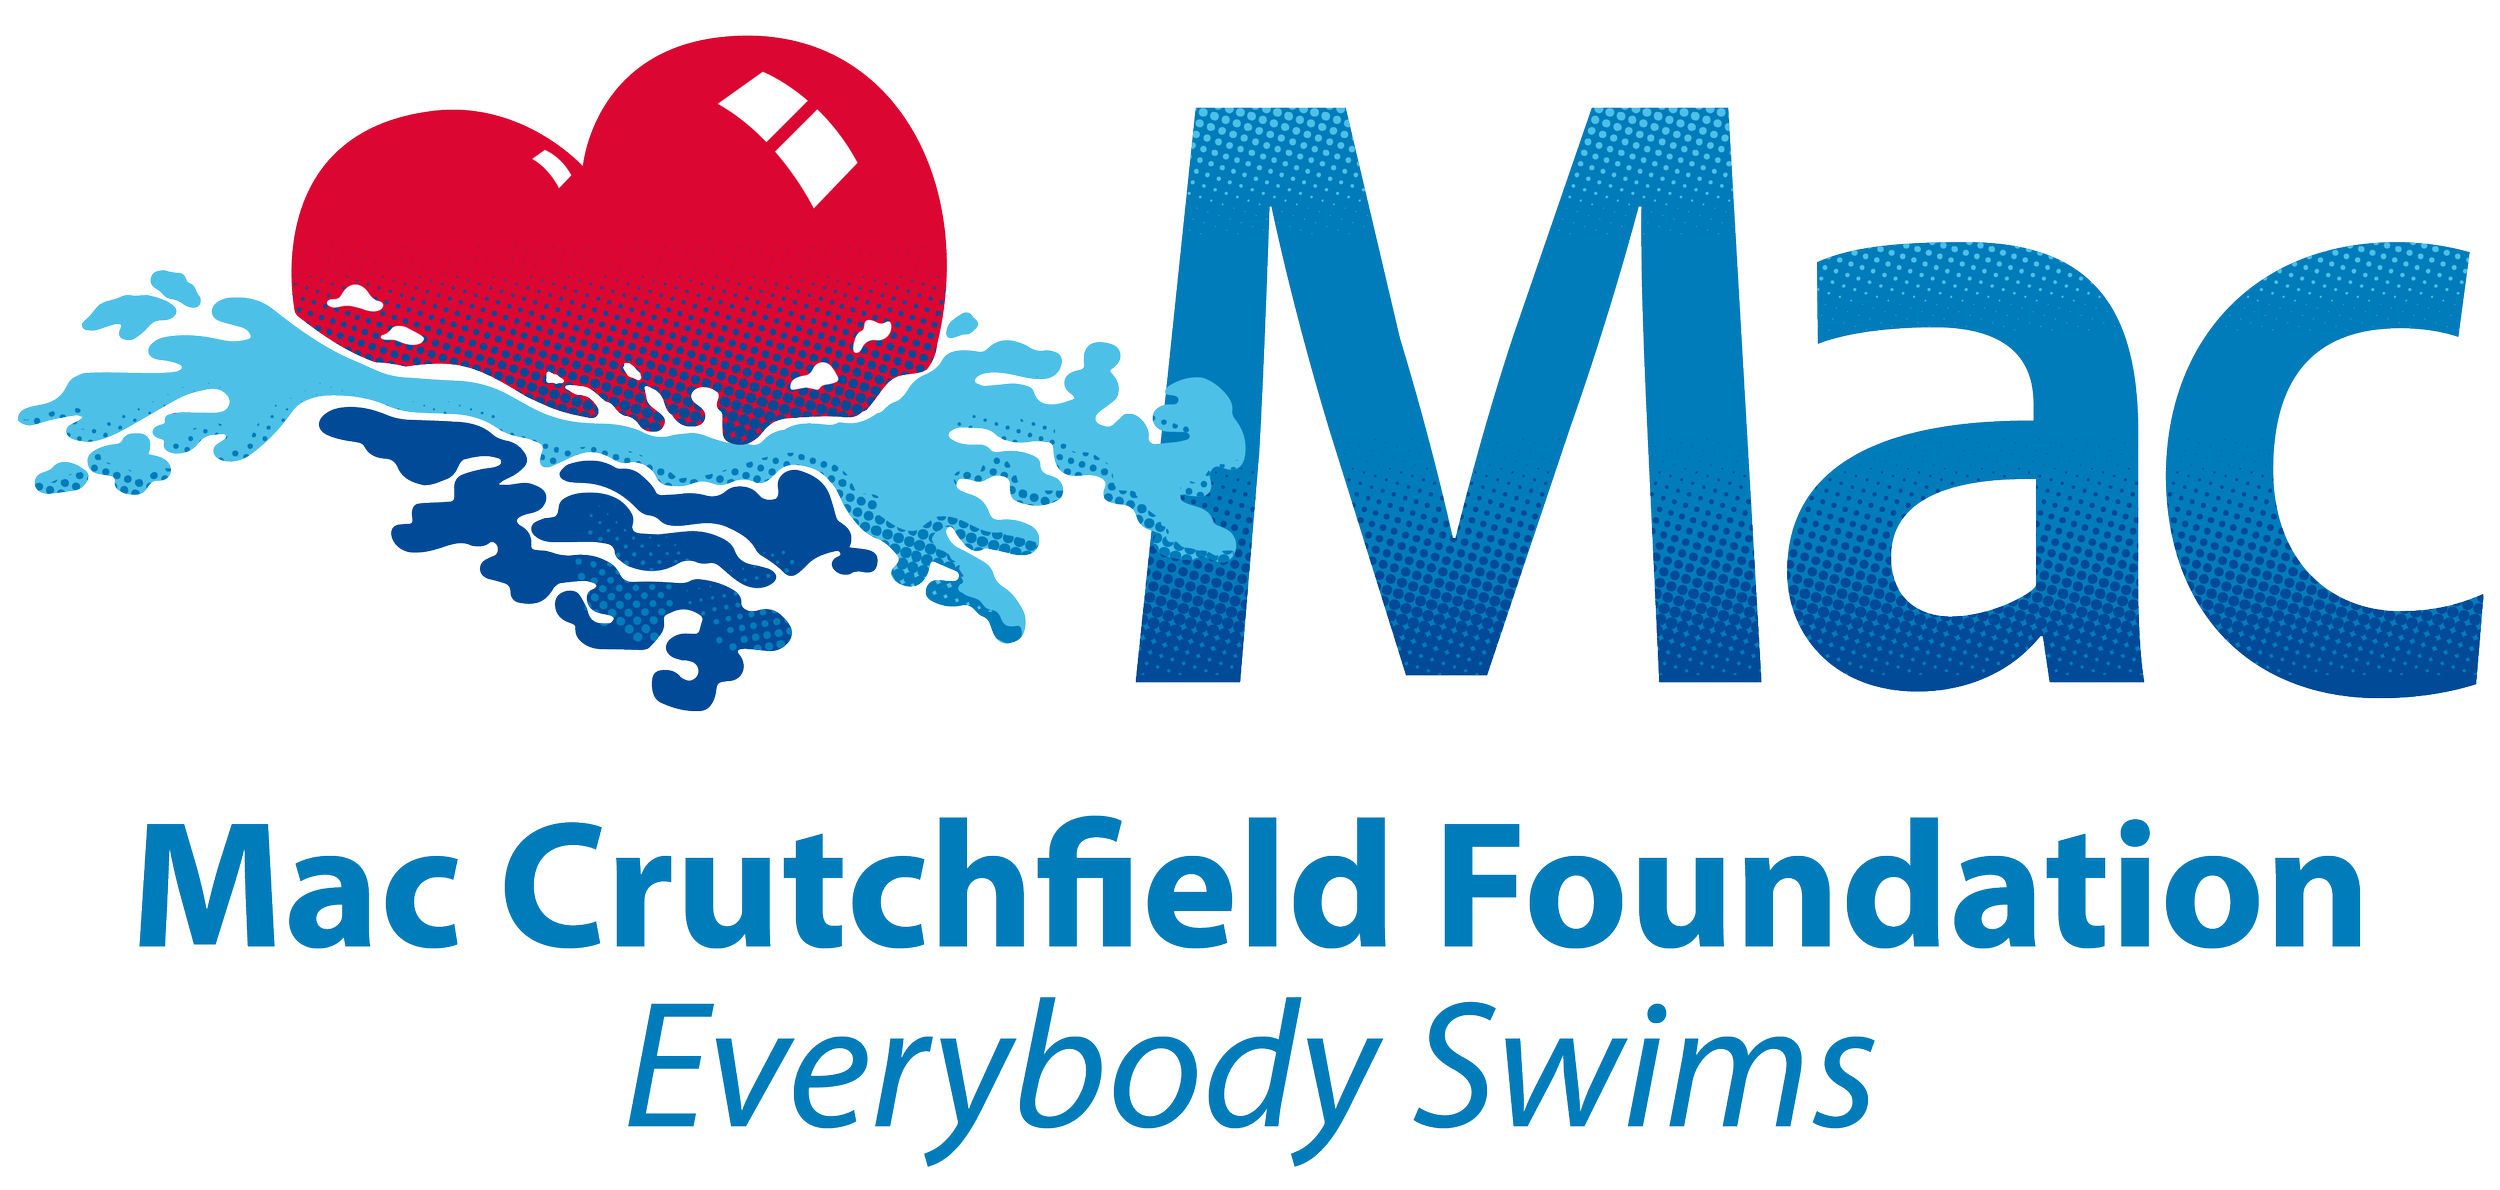 MacCrutchfield-logo.png